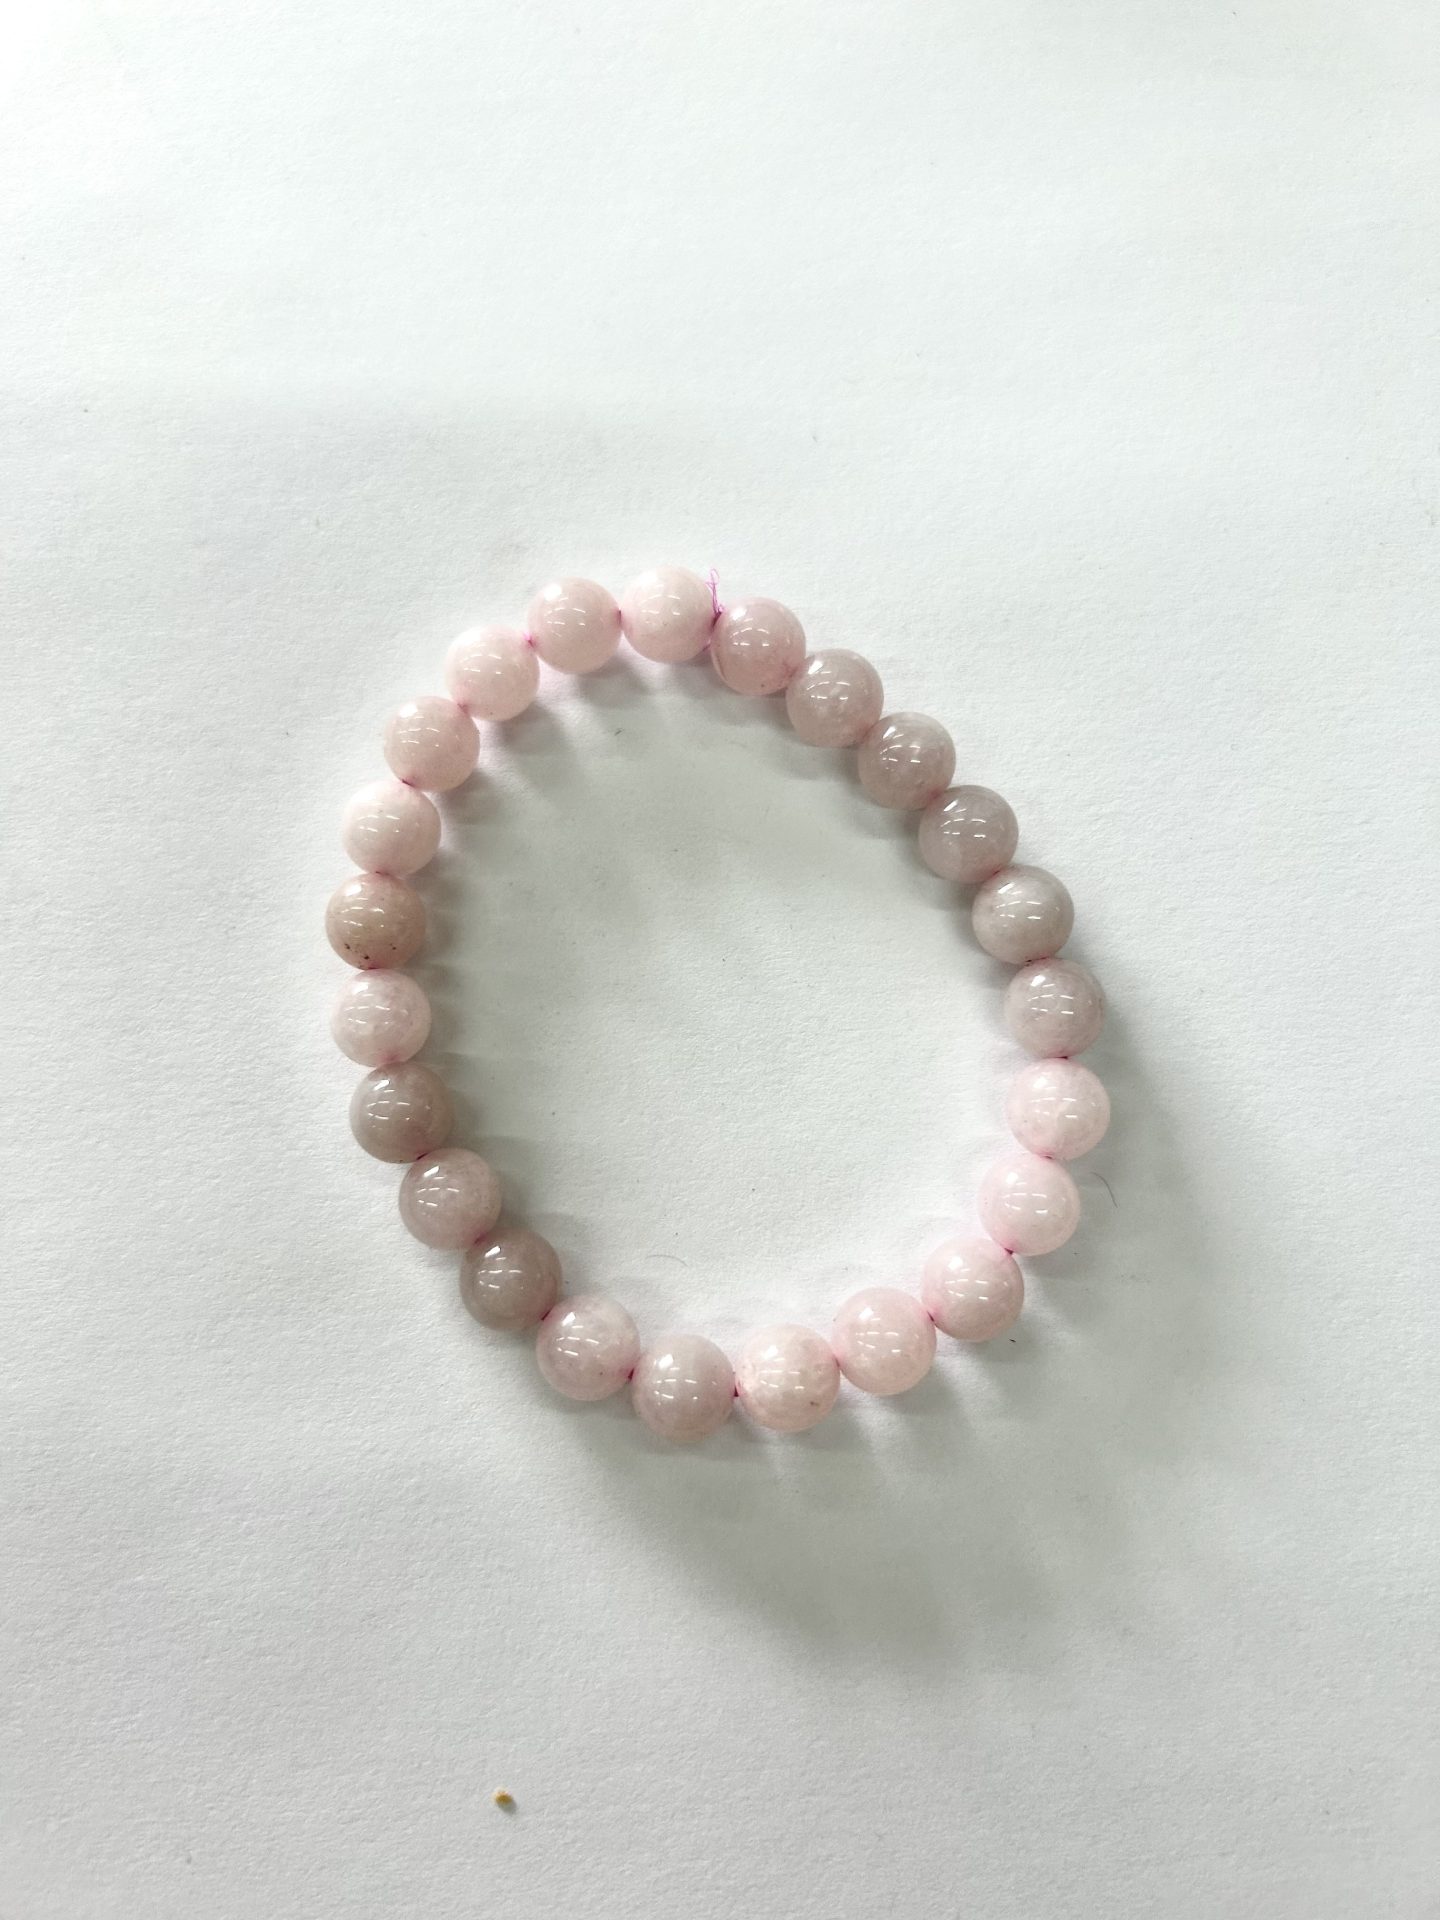 8mm rose quartz bracelet